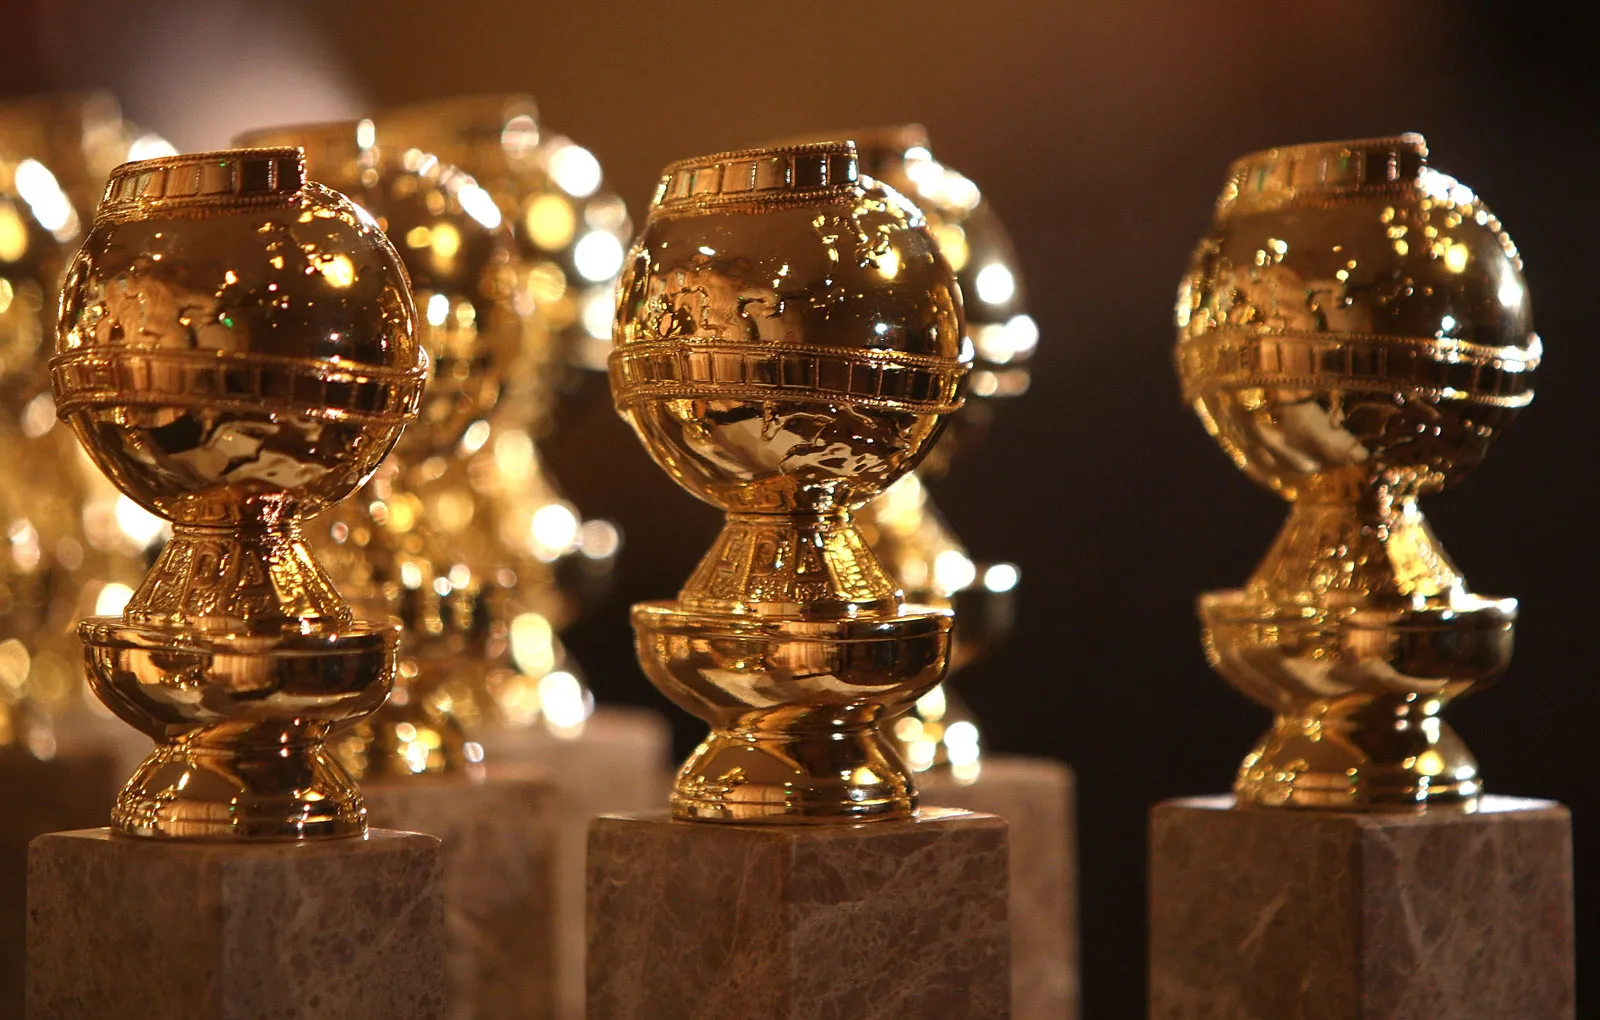  Golden-Globes-Awards Gouden-Globe-Awards 